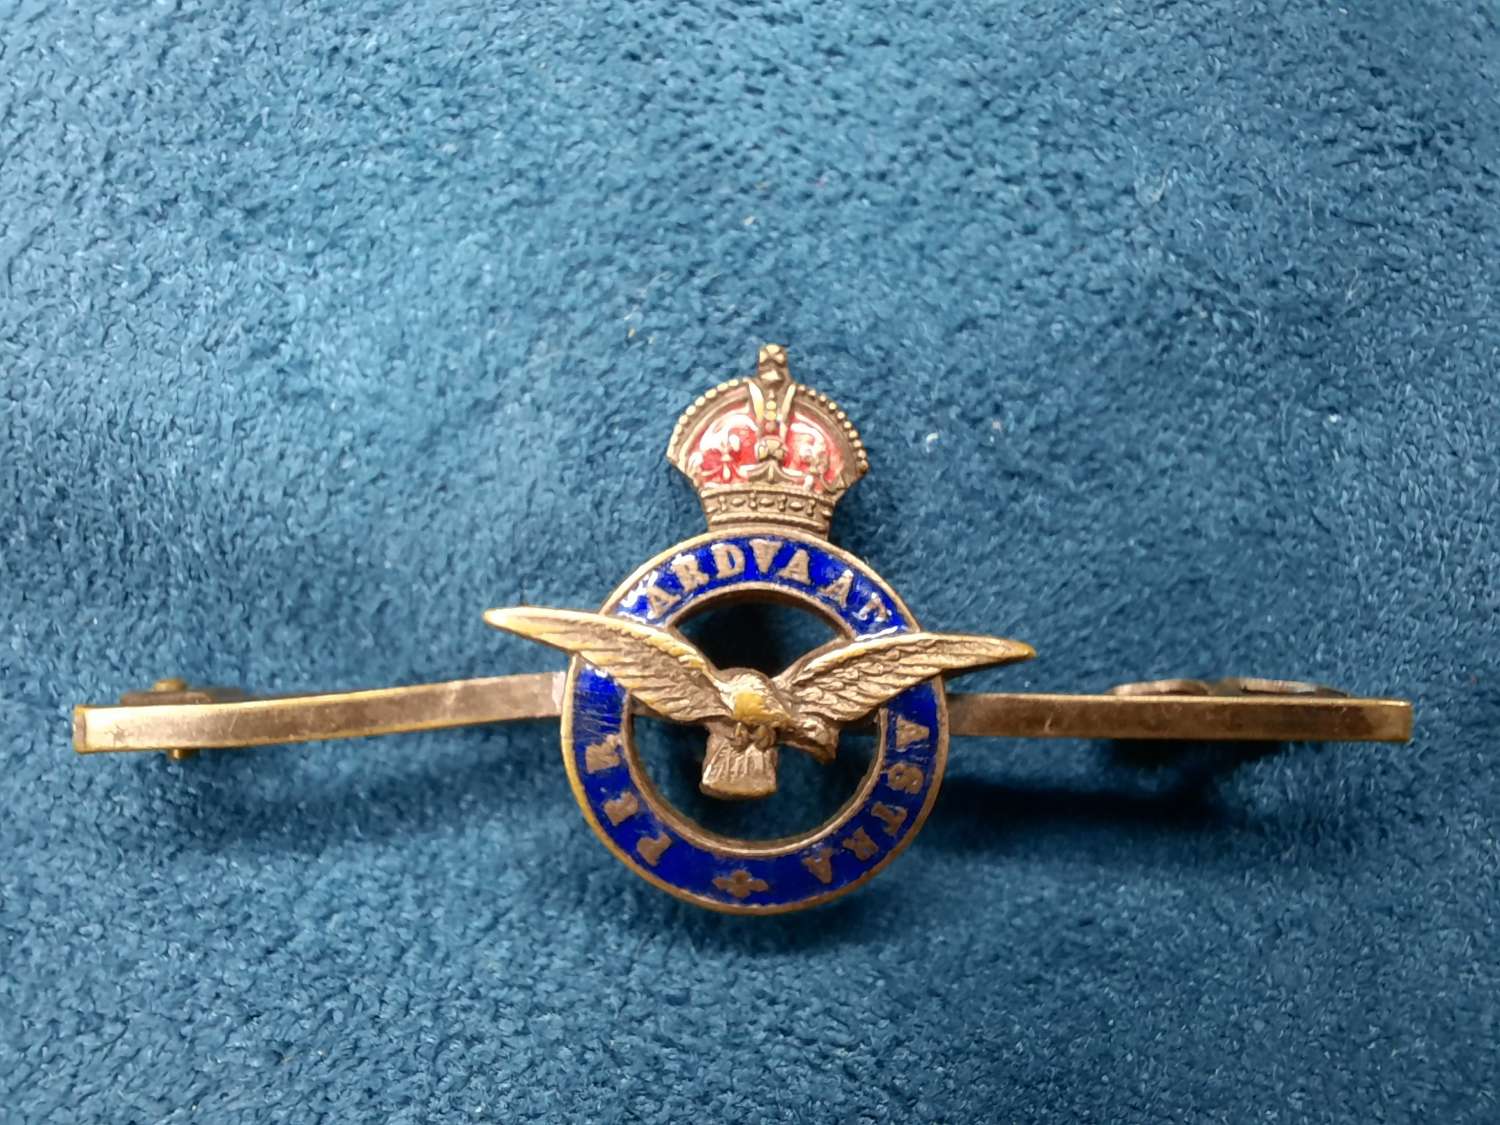 WW2 RAF Per Ardua ad Astra Tie Pin